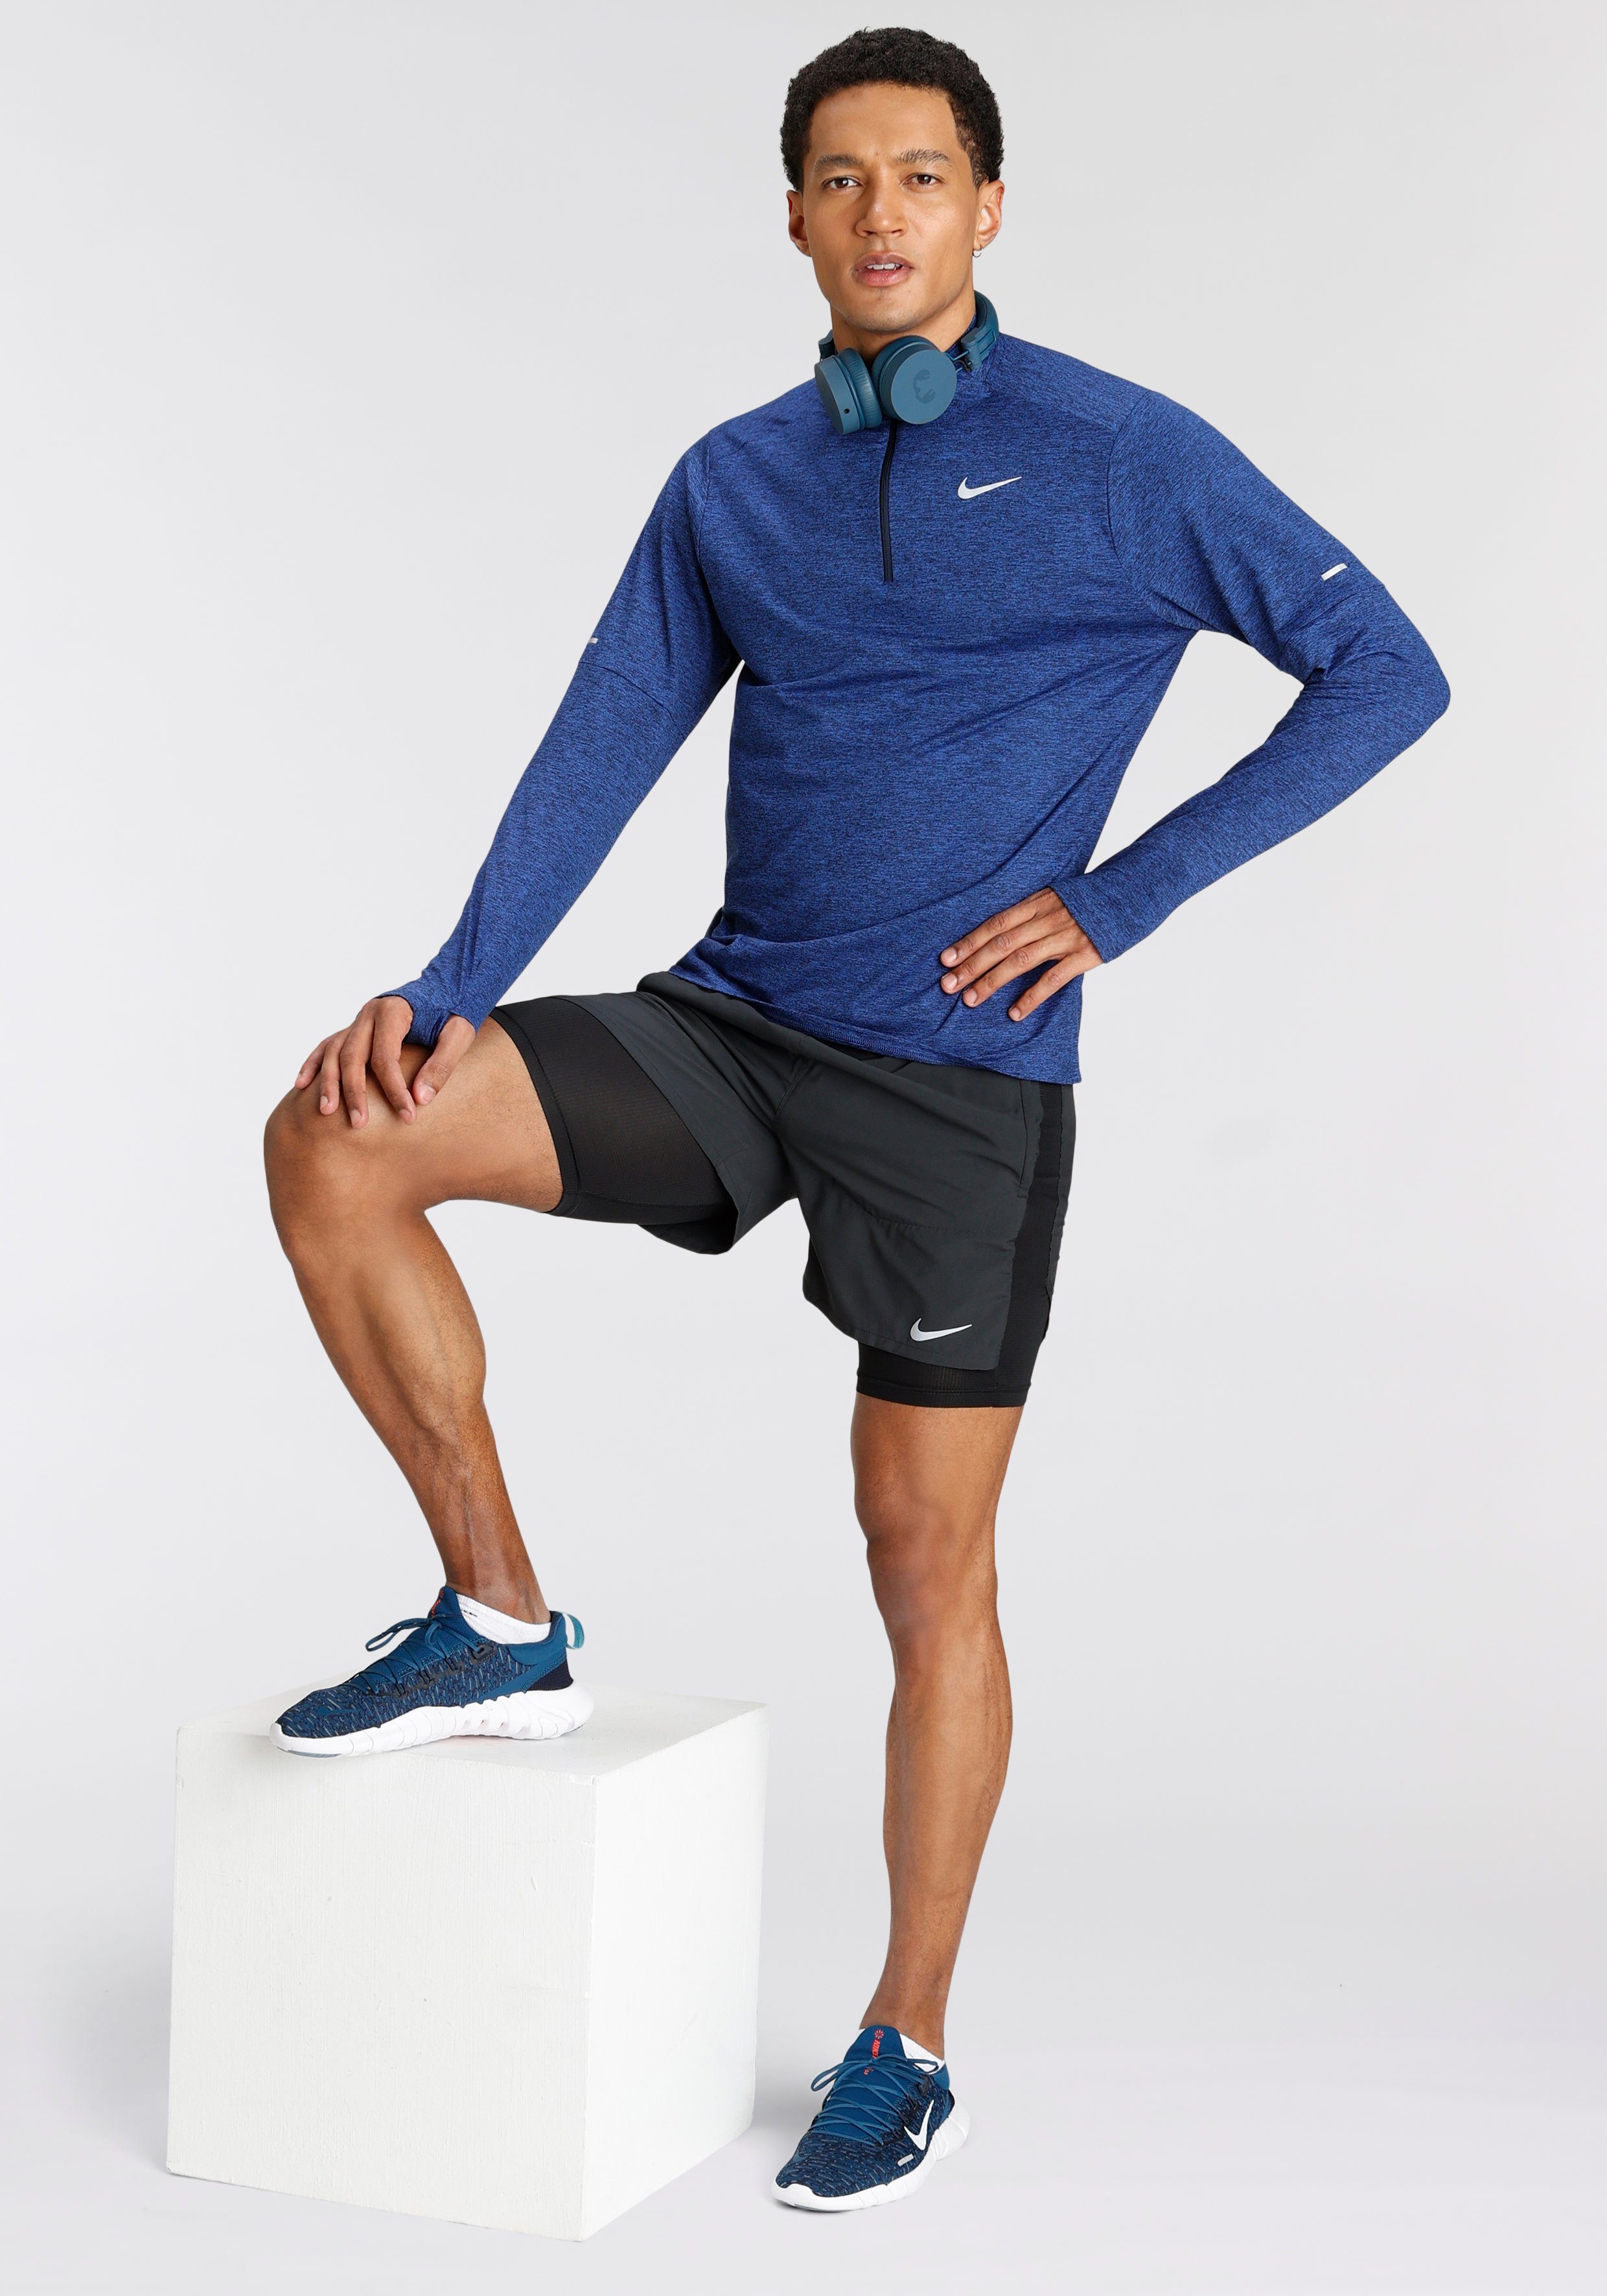 Element ROYAL/HTR/REFLECTIVE 1/-Zip Dri-FIT OBSIDIAN/GAME Top SILV Nike Running Laufshirt Men's